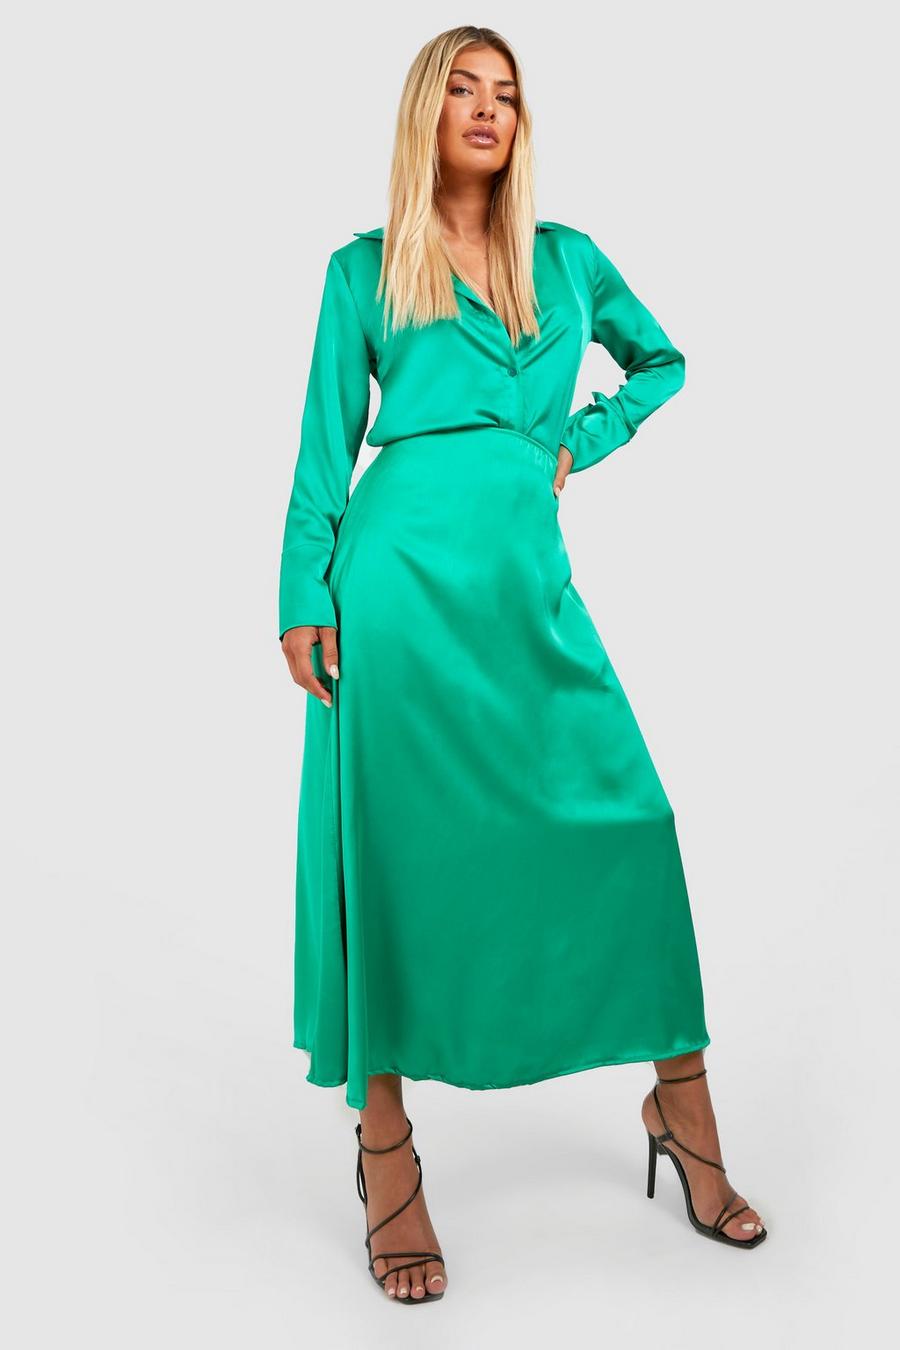 Bright green Satin Shirt & Flowy Midaxi Skirt  image number 1